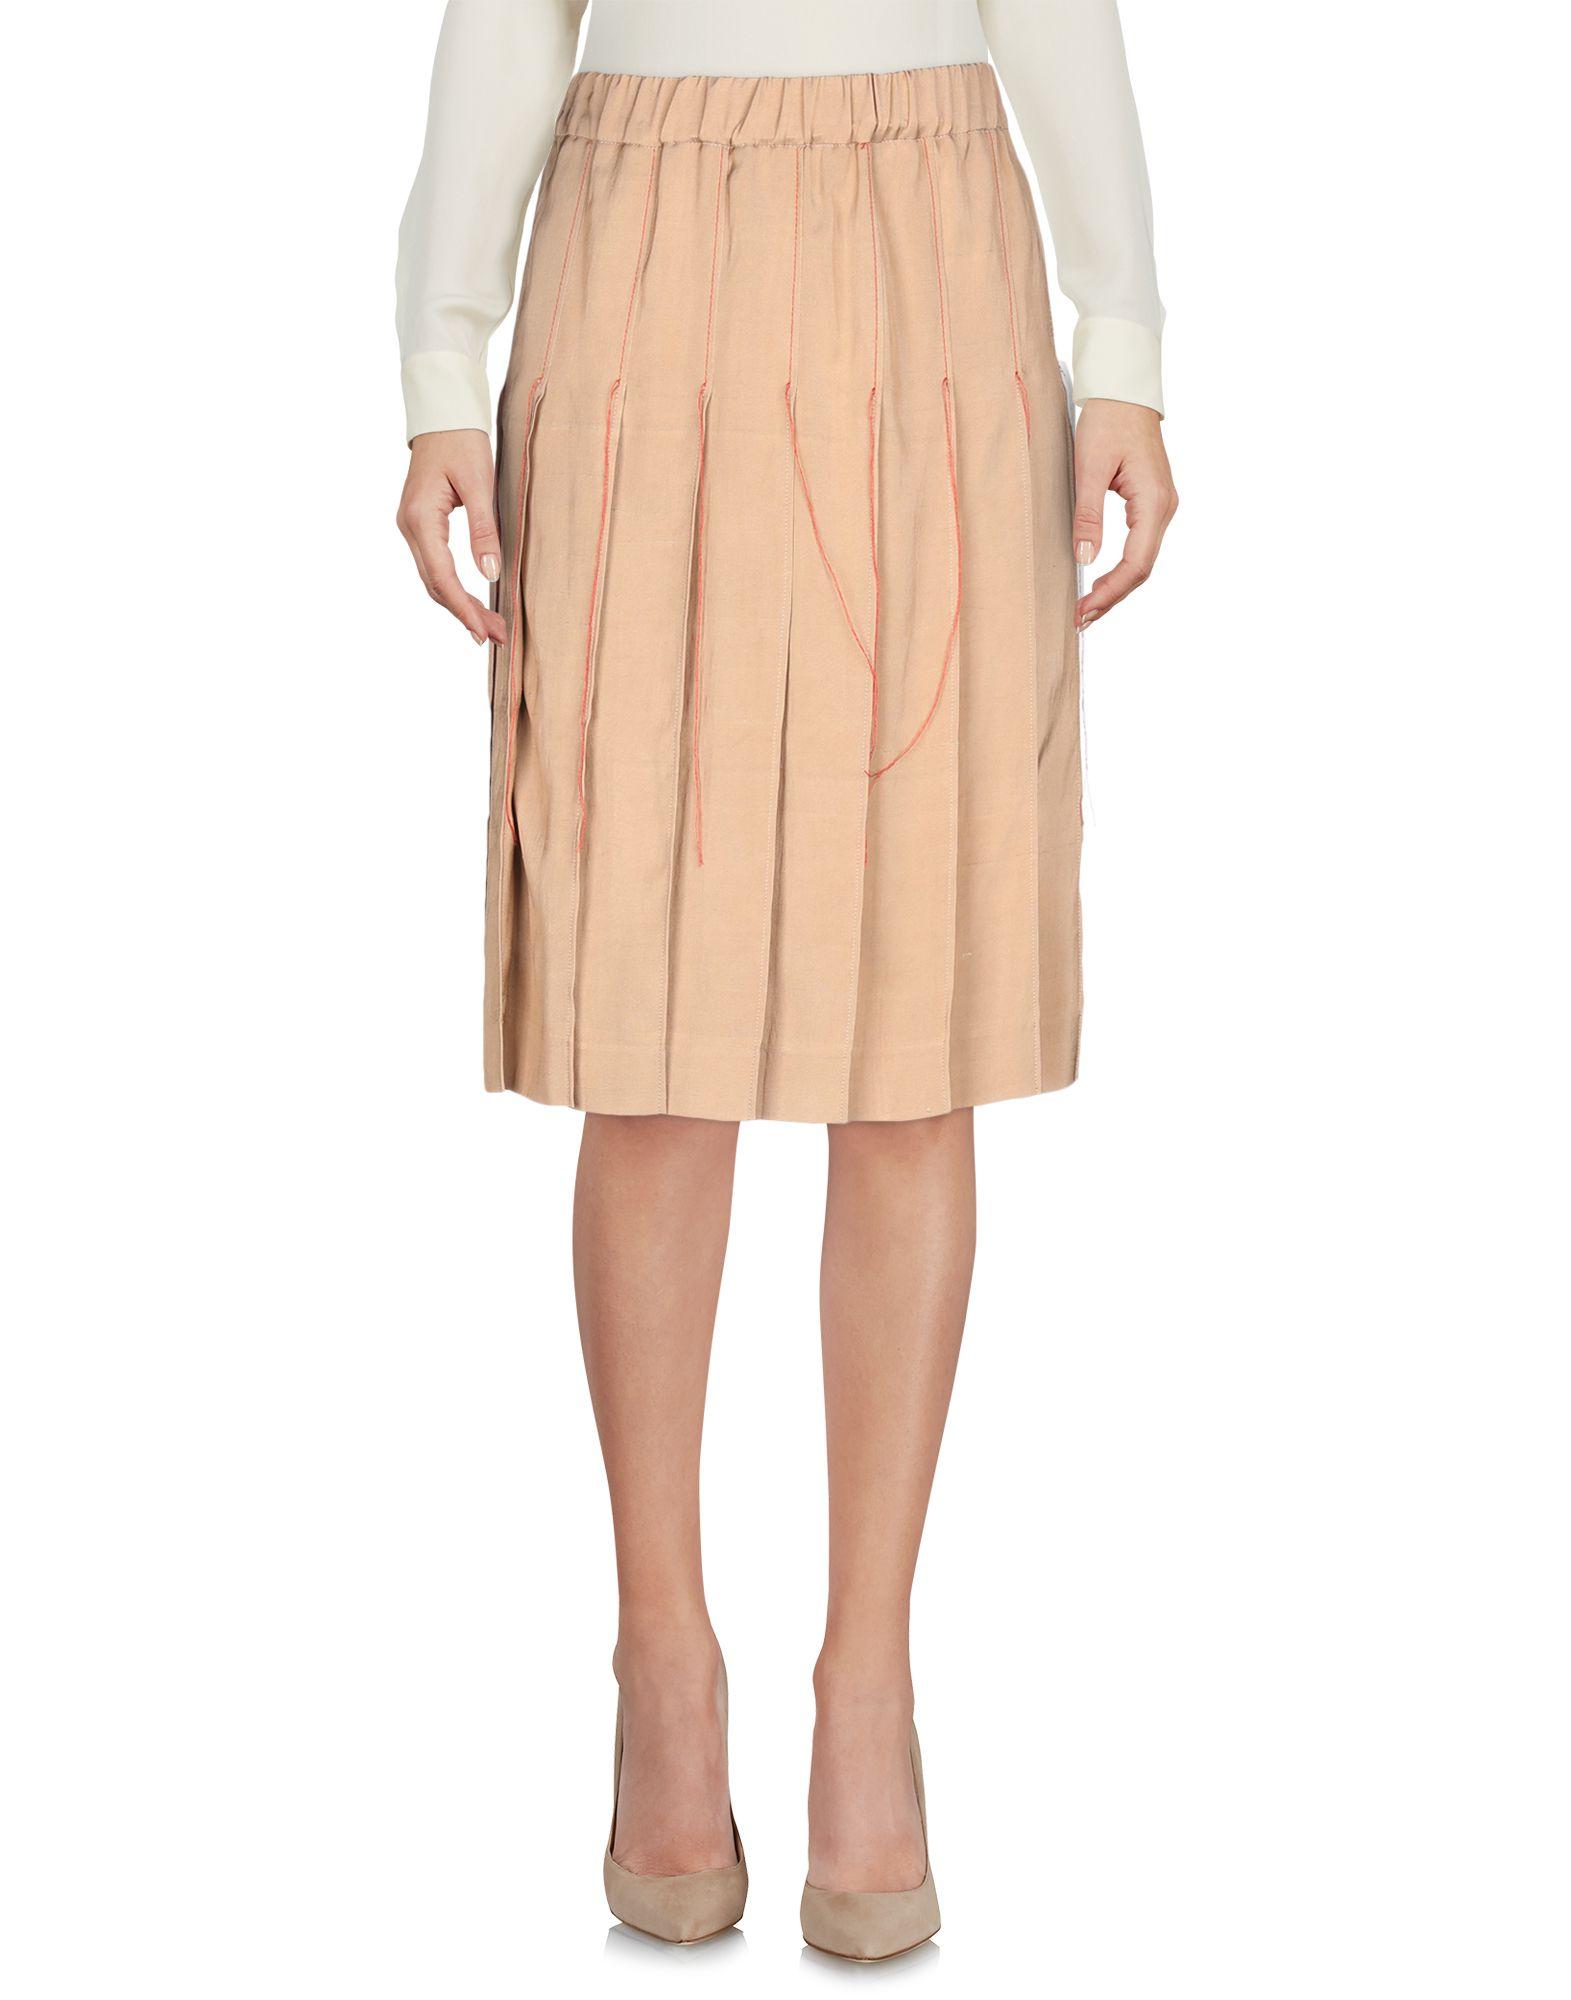 Marni Knee Length Skirt in Natural - Lyst